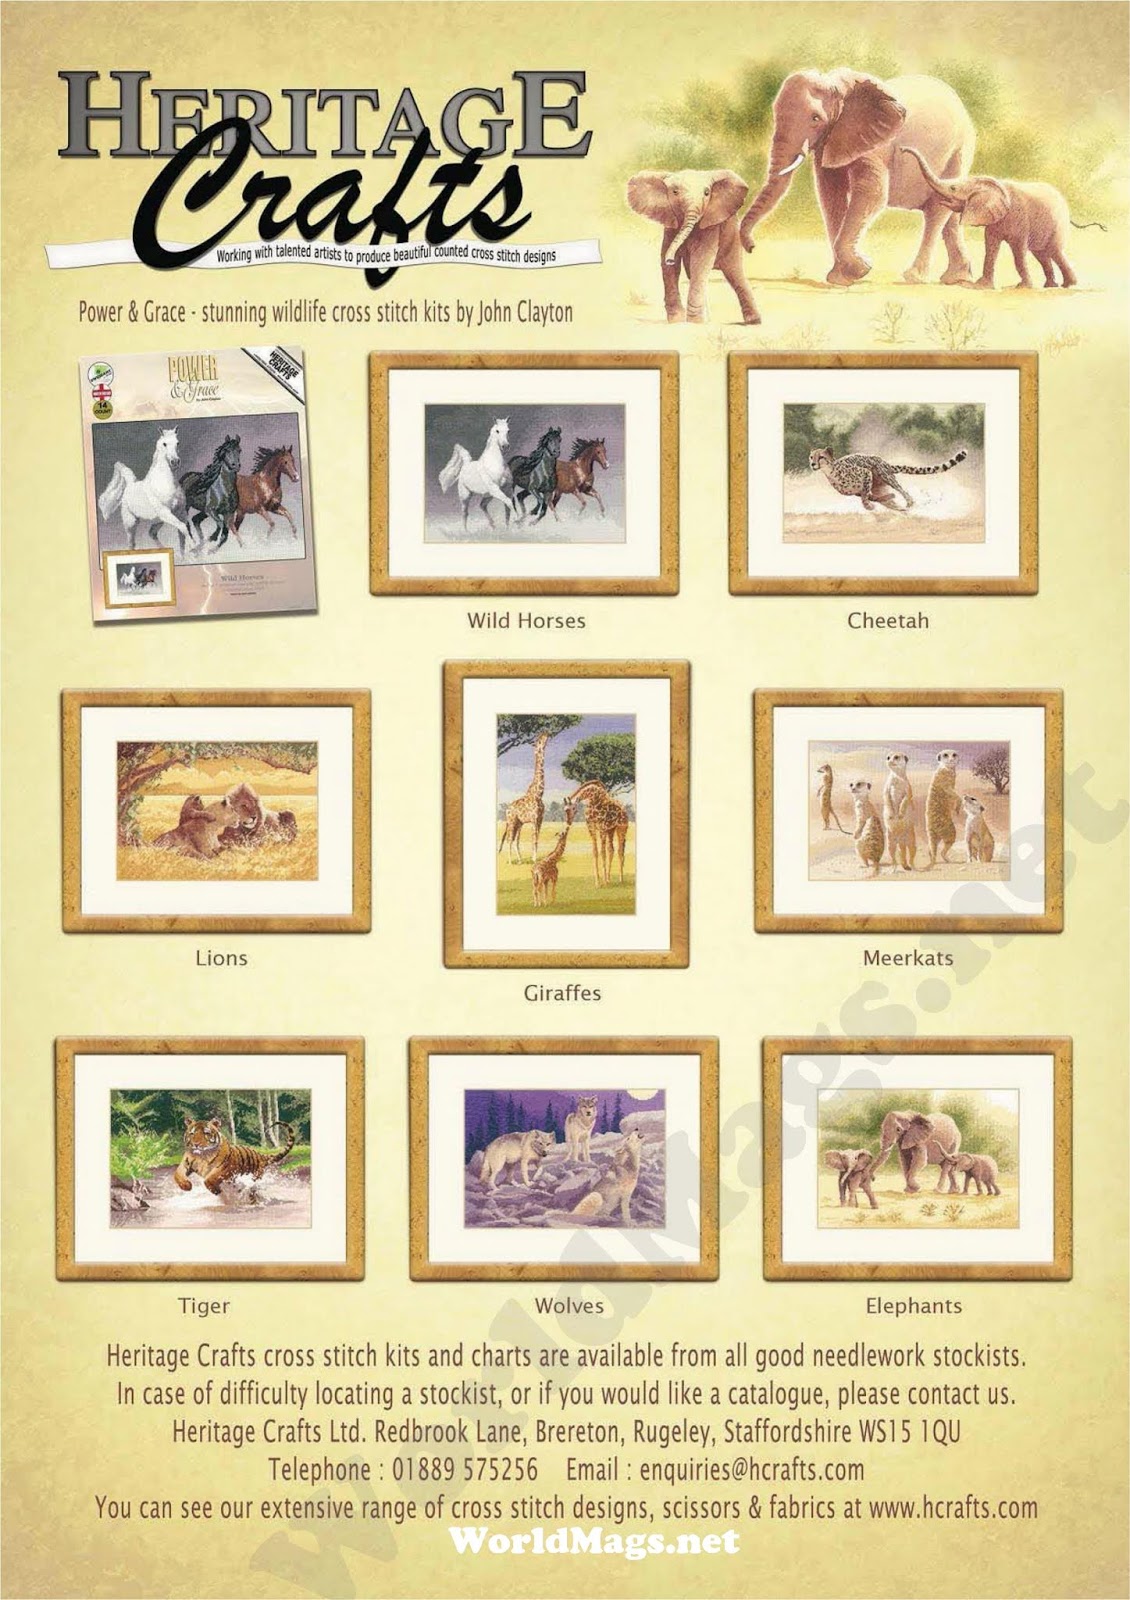 Heritage перевод на русский. Журнал Cross Stitch collection. Схема вышивки "Heritage Crafts" Wild Horses.